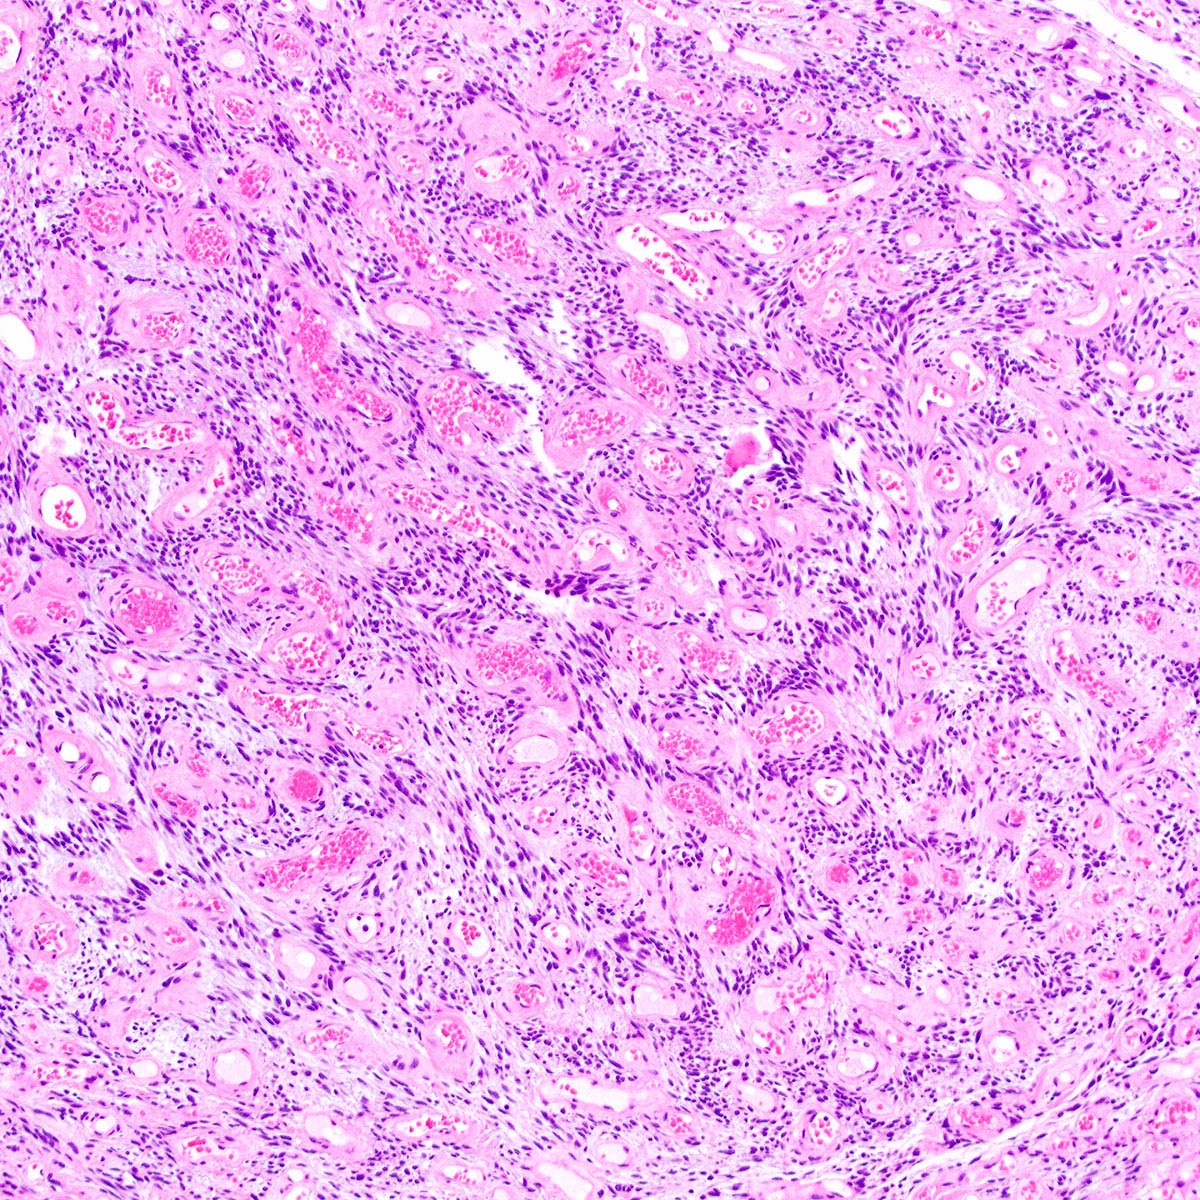 Pathology Outlines Cellular Angiofibroma